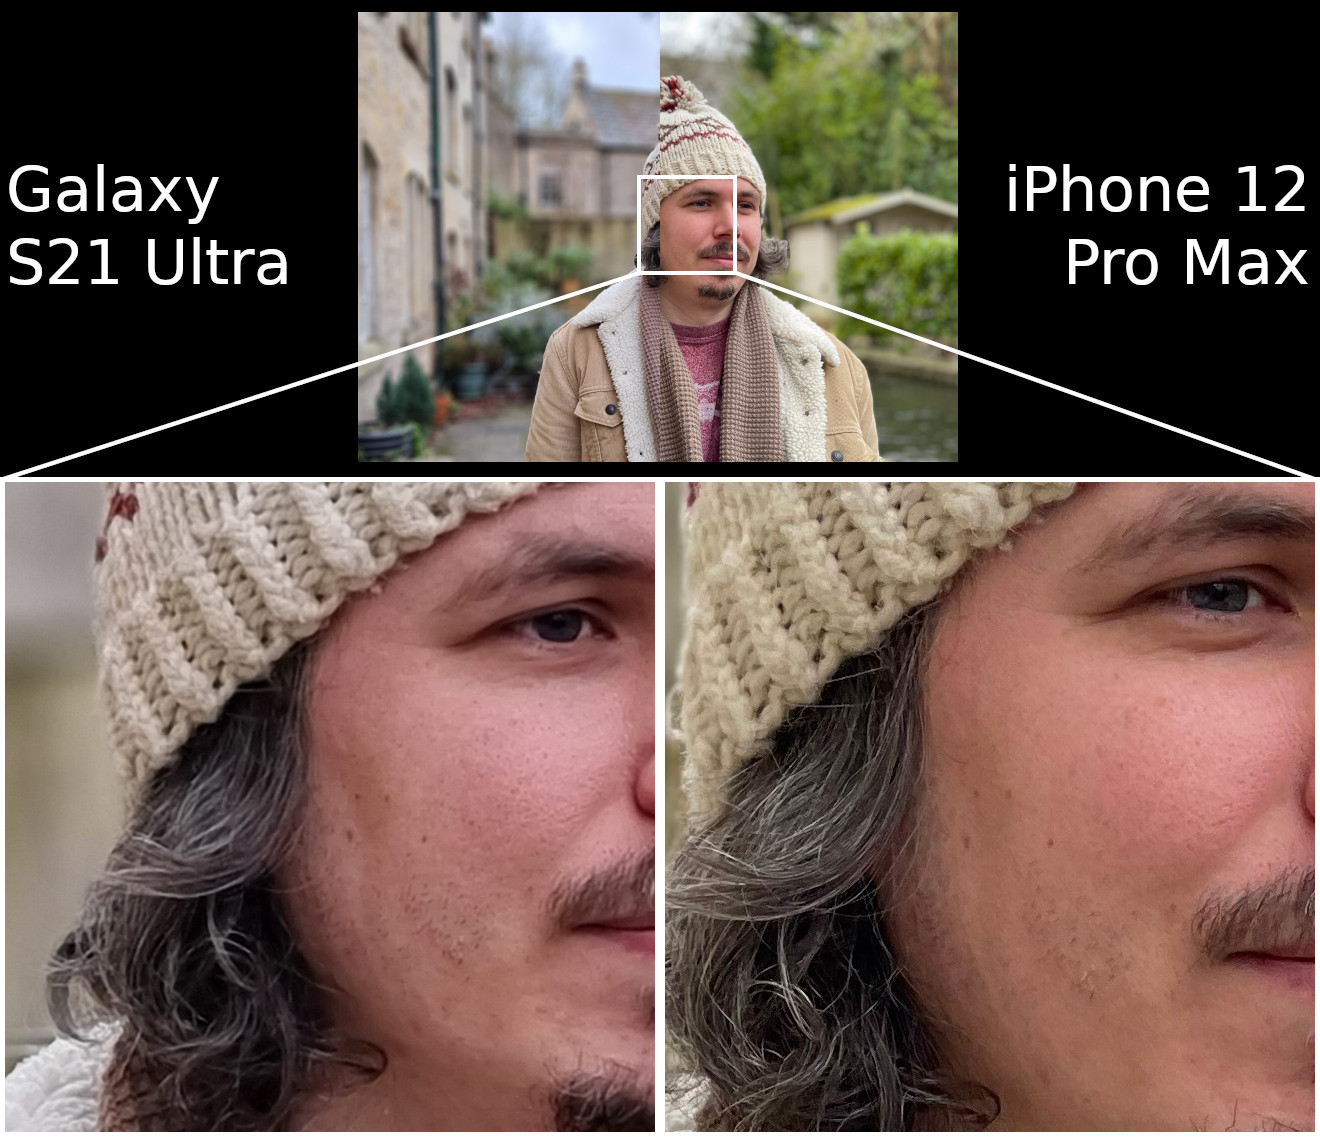 Portrait - Samsung Galaxy S21 Ultra vs iPhone 12 Pro Max